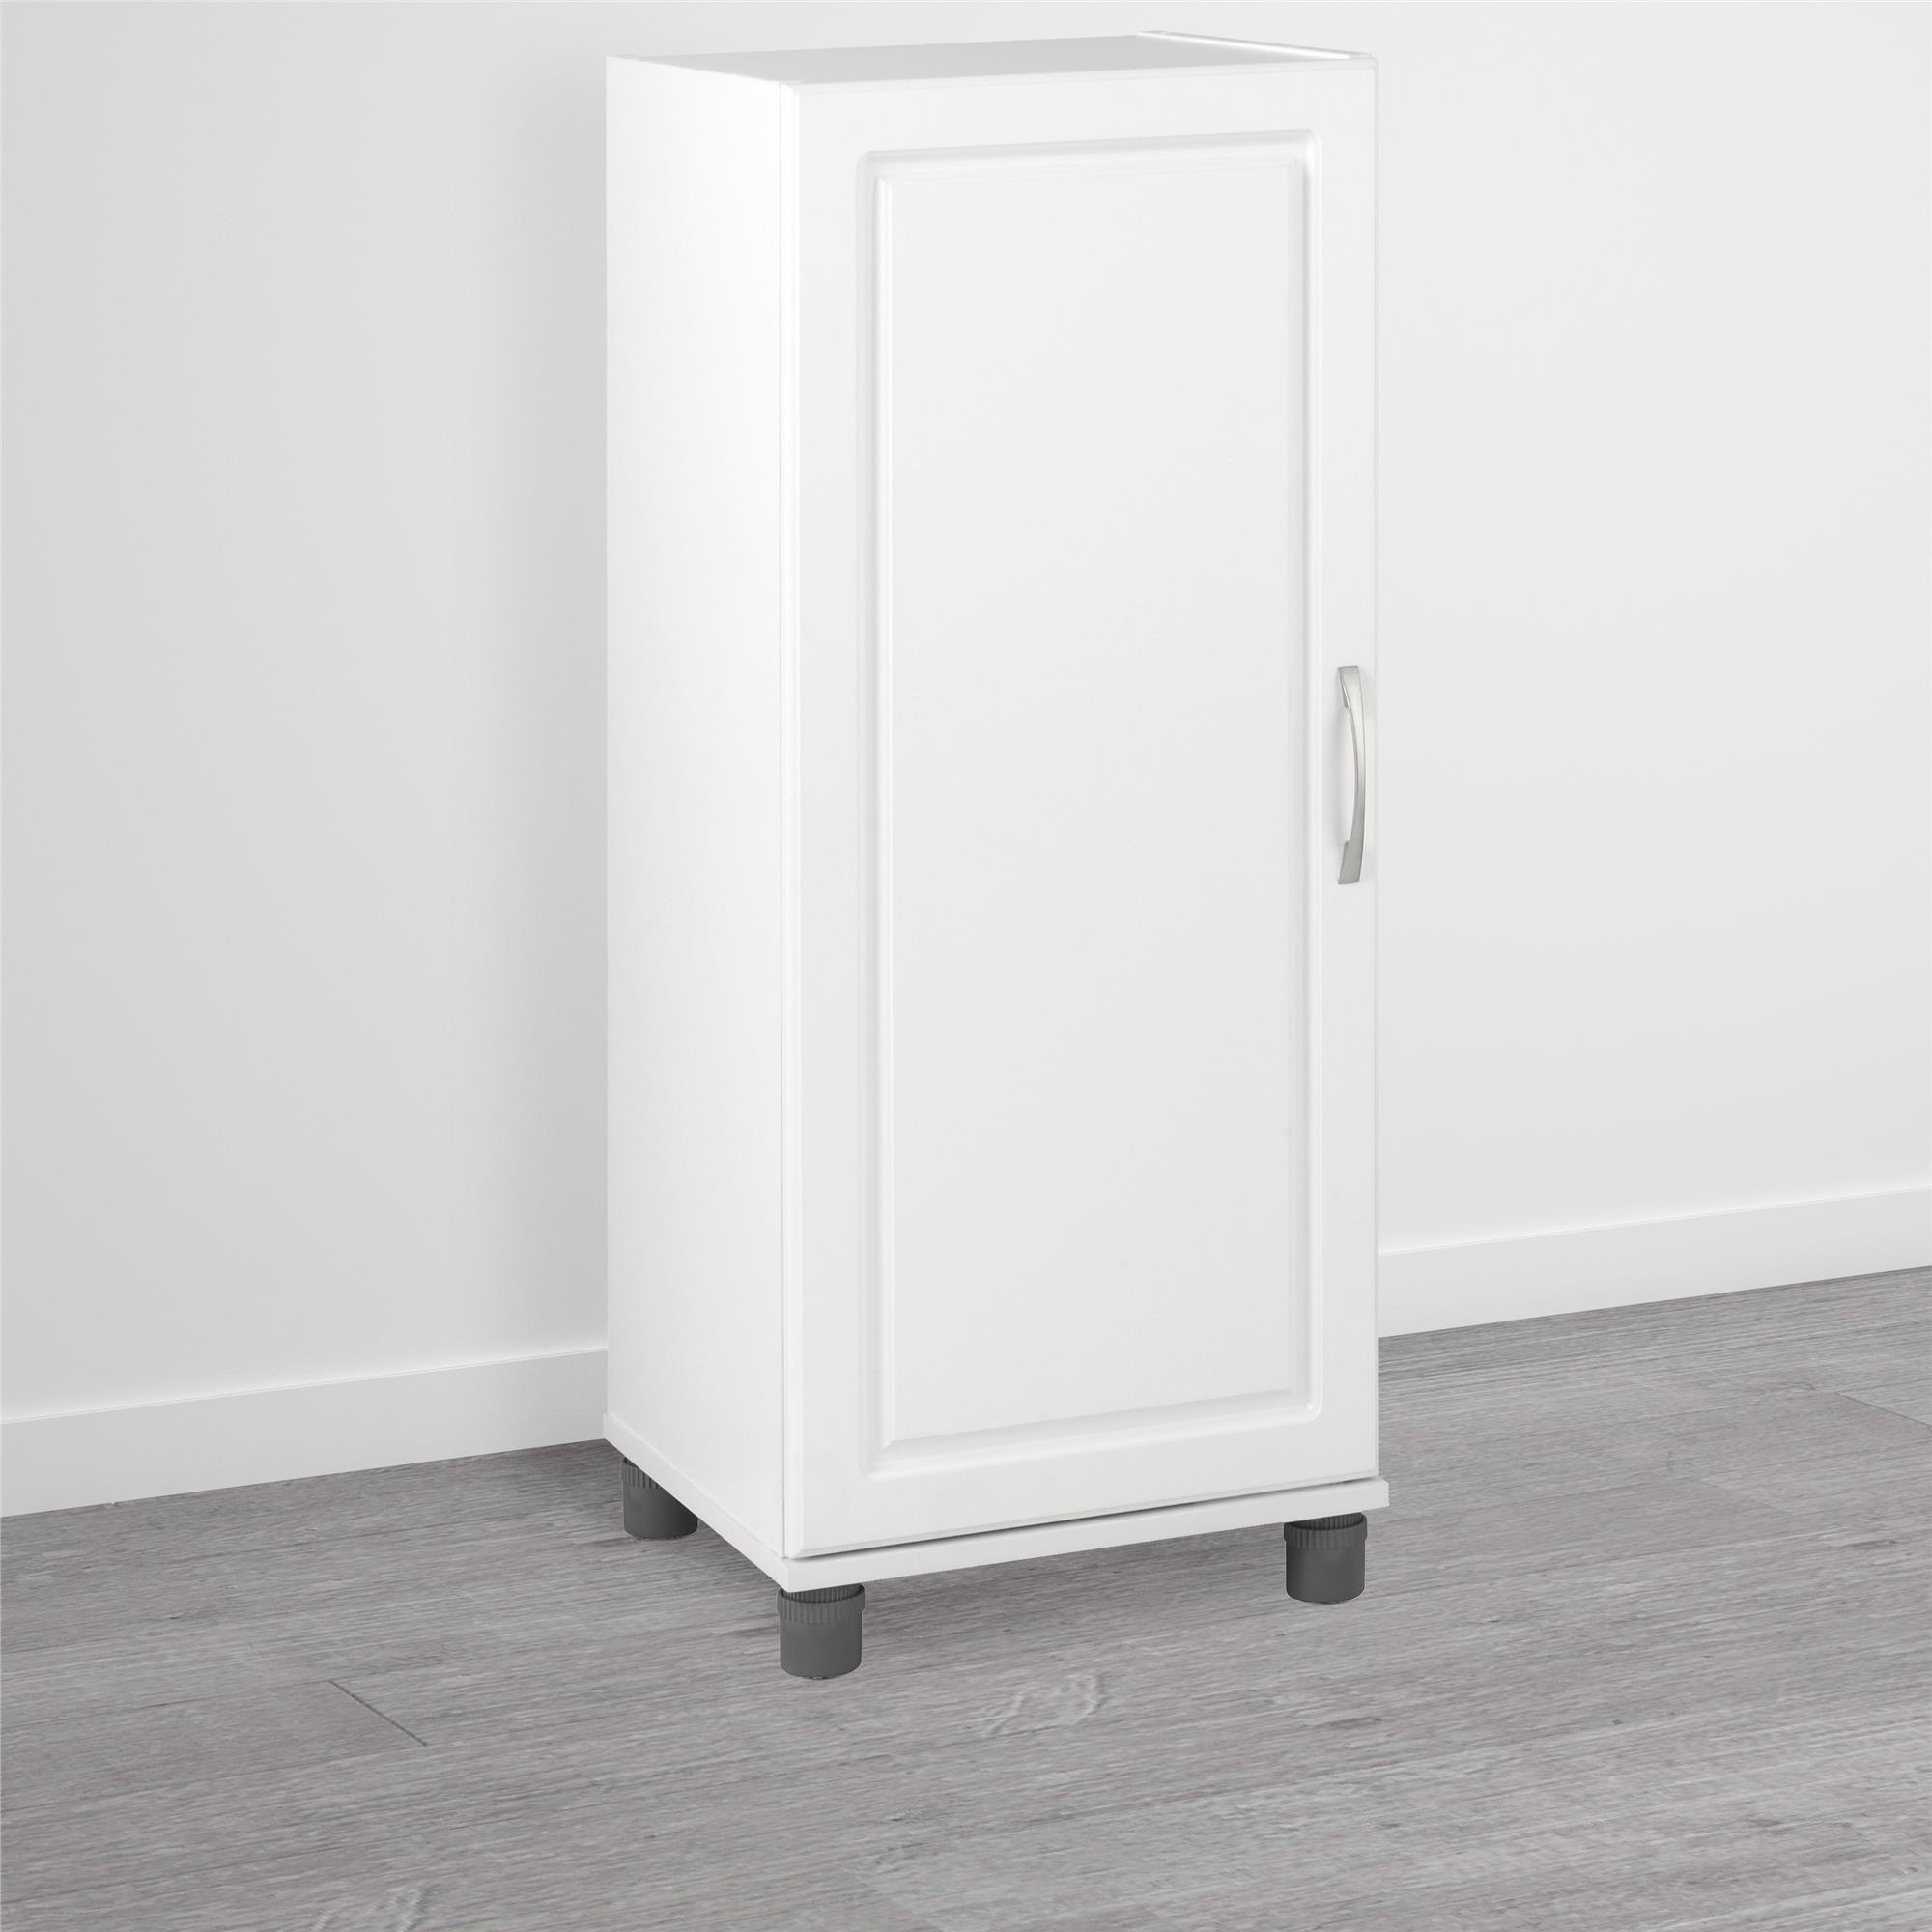 Systembuild Evolution Utility Storage Cabinet, White - image 2 of 15